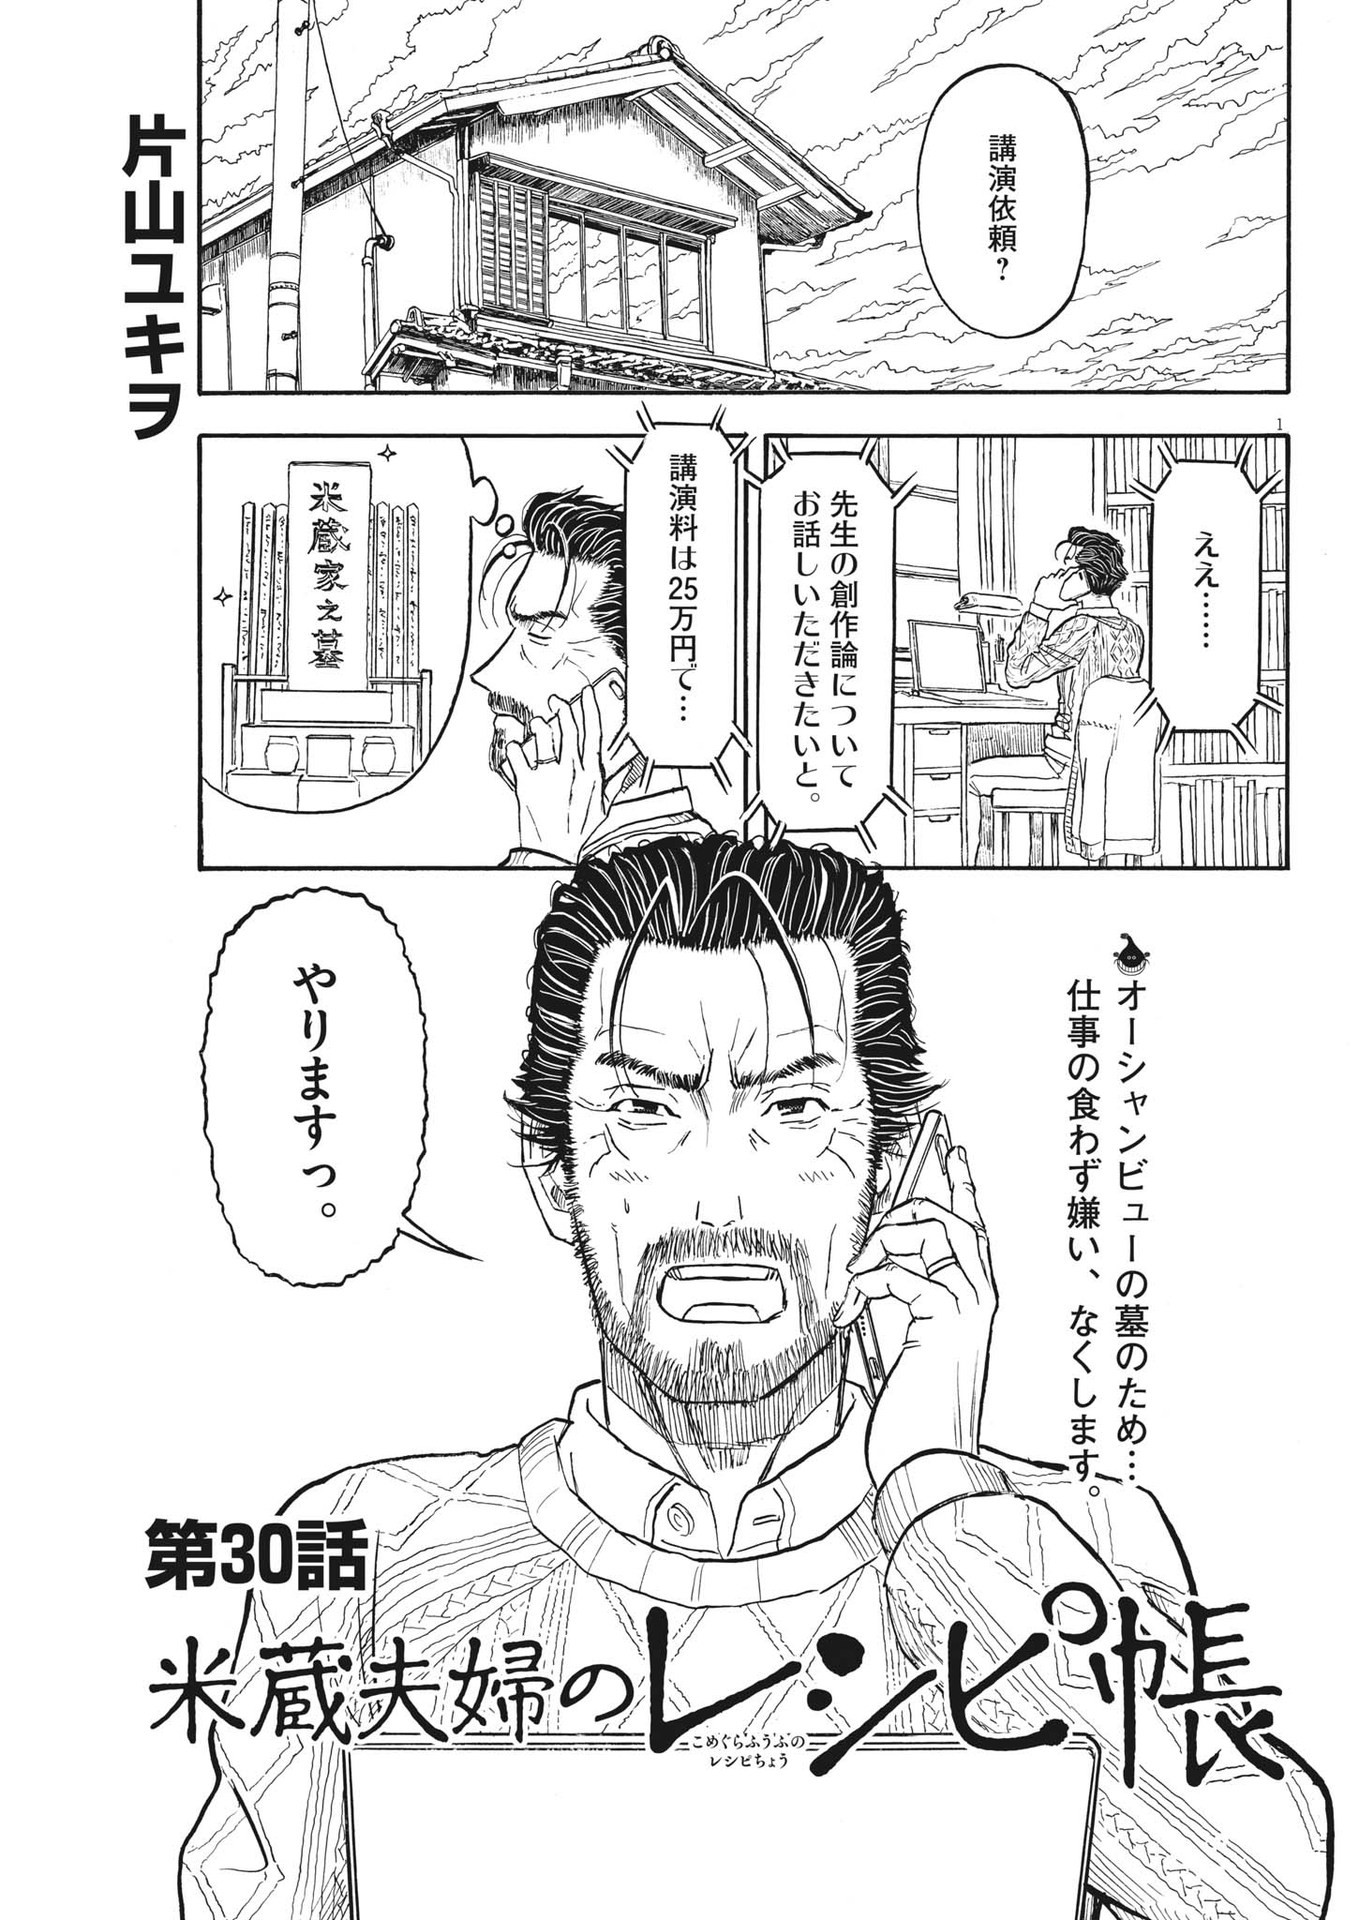 Komegura Fuufu no Recipe-chou - Chapter 30 - Page 1